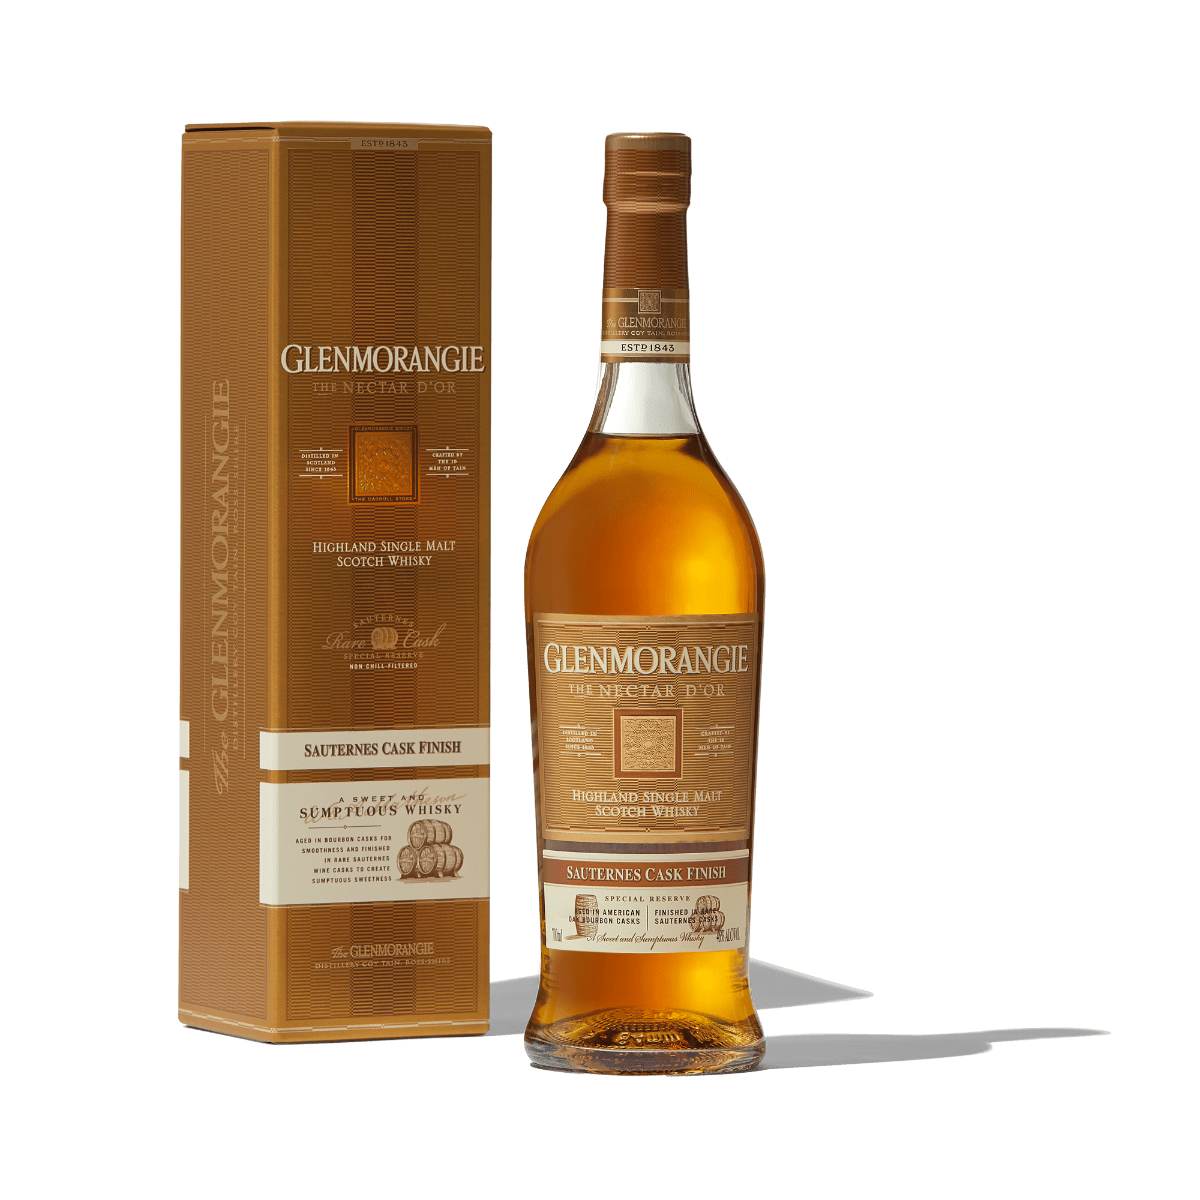 Glenmorangie Highland Single Malt Scotch Whisky Nectar D'Or 12 year old